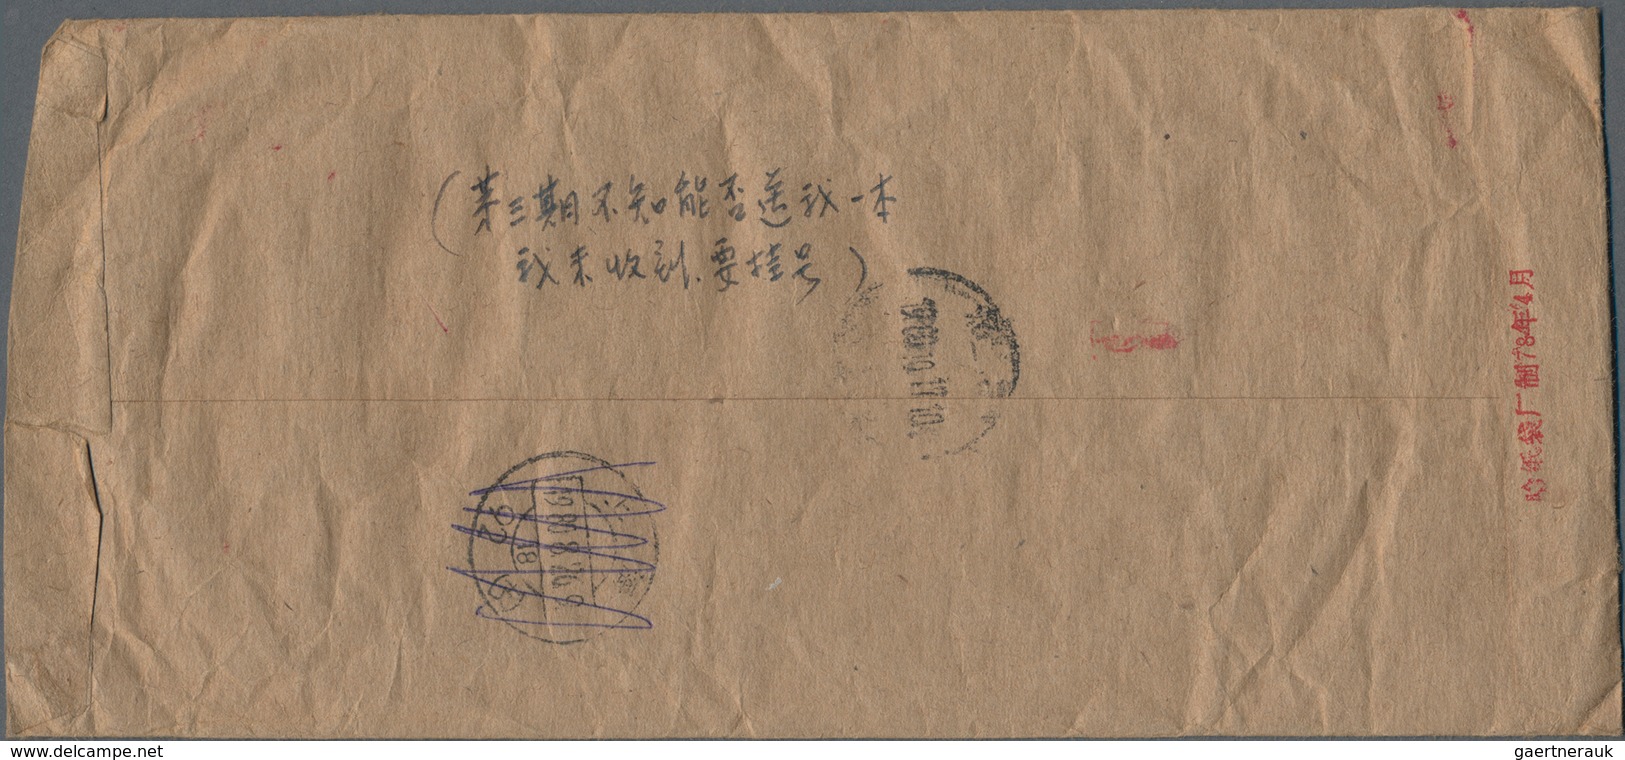 China - Volksrepublik - Besonderheiten: 1951/96, meter marks imprint or label on commercial used ent